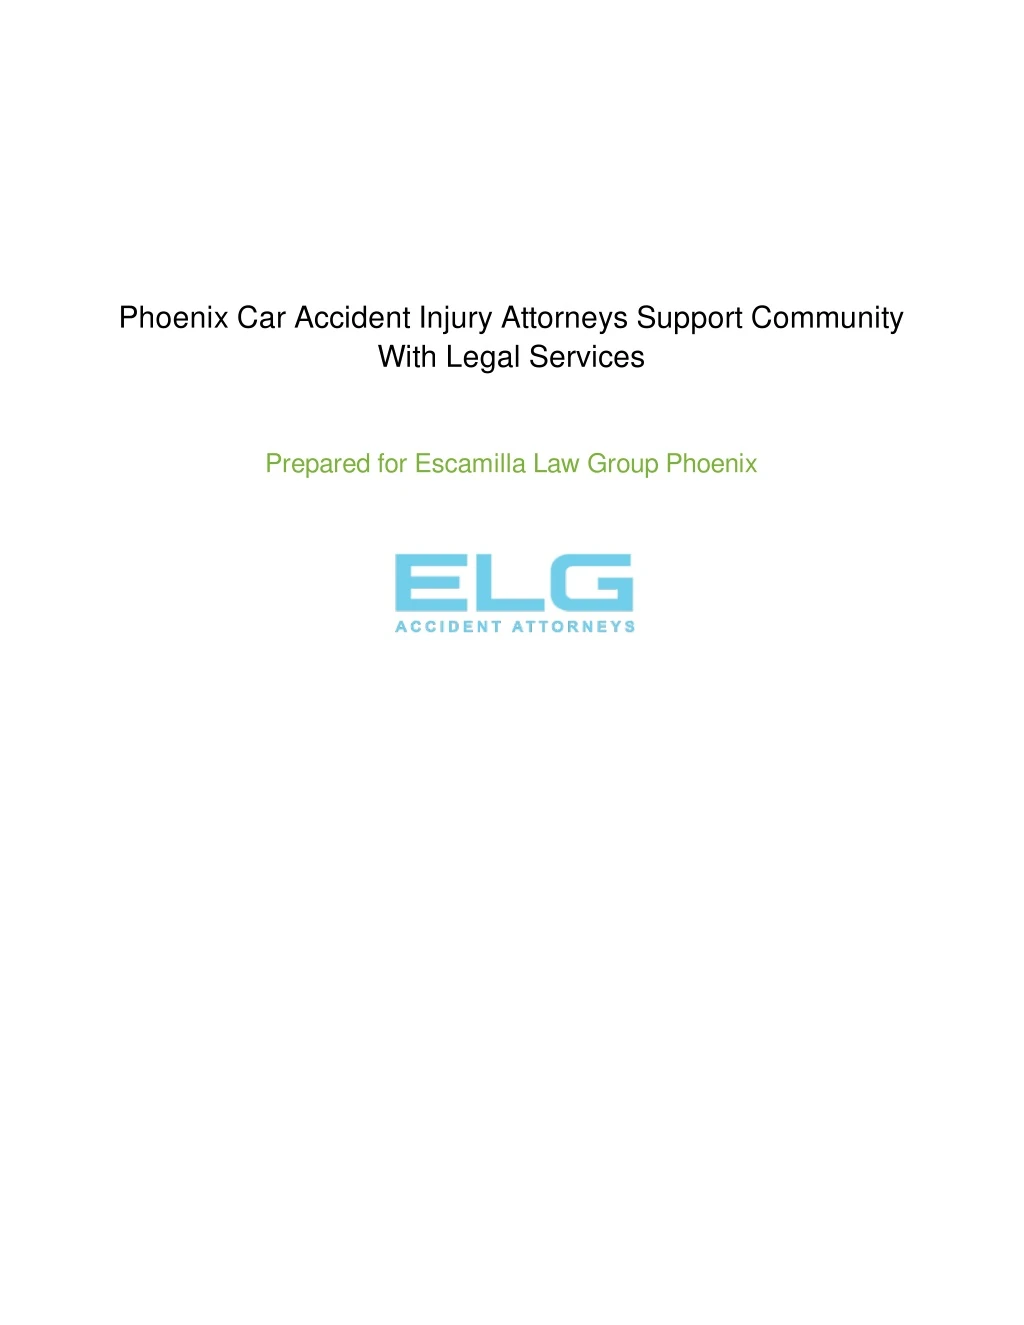 phoenix car accident injury attorneys support